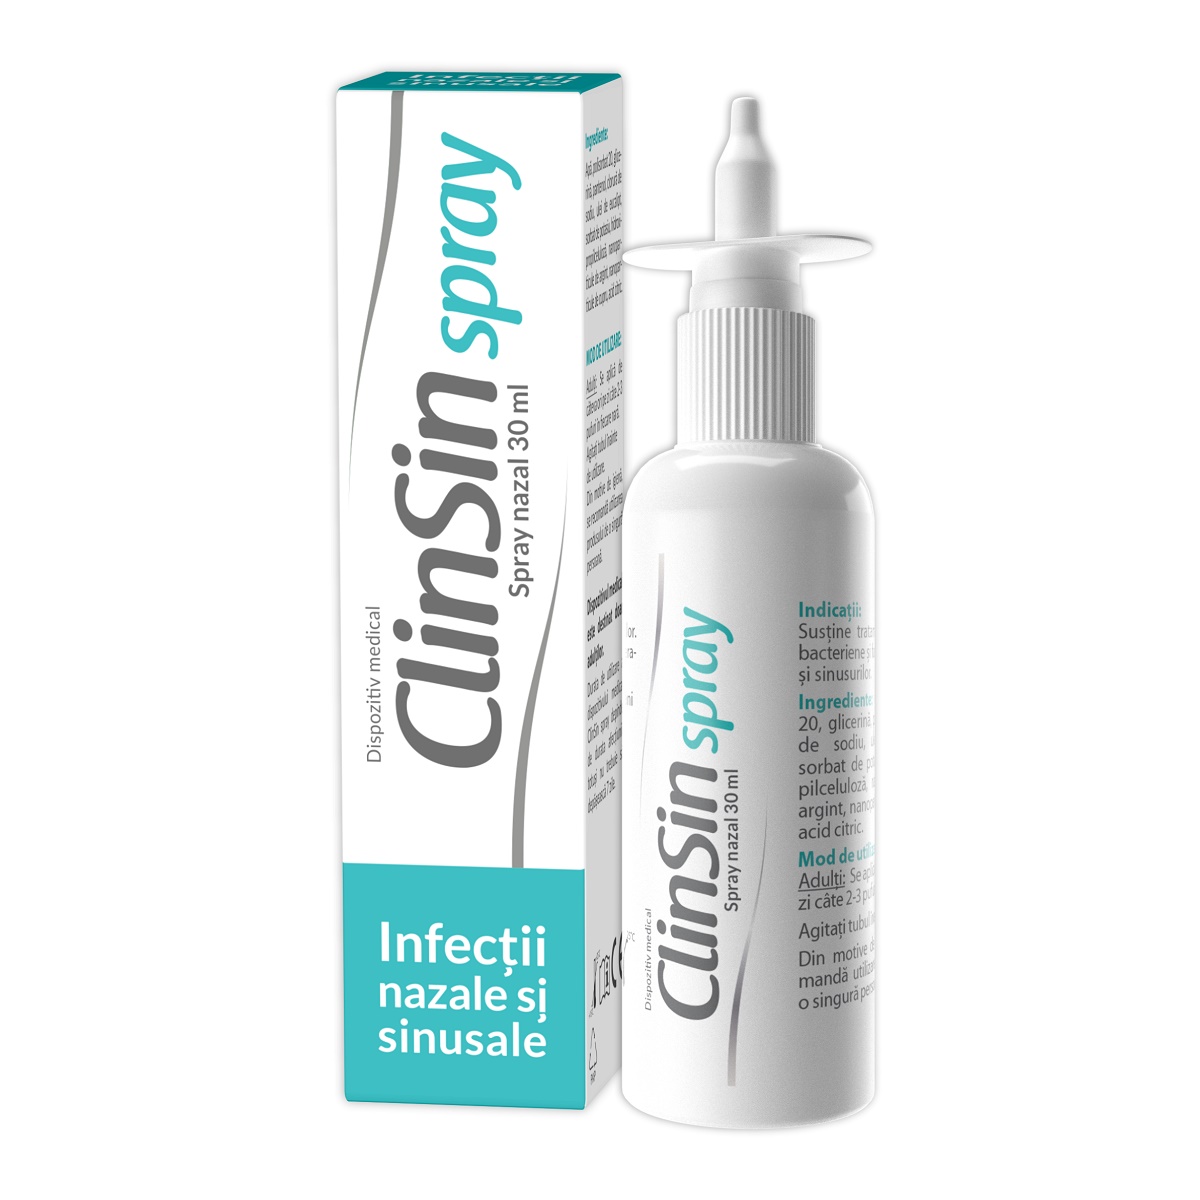 Solutii nazale - Clinsin spray nazal, 30 ml, Natur Produkt, sinapis.ro